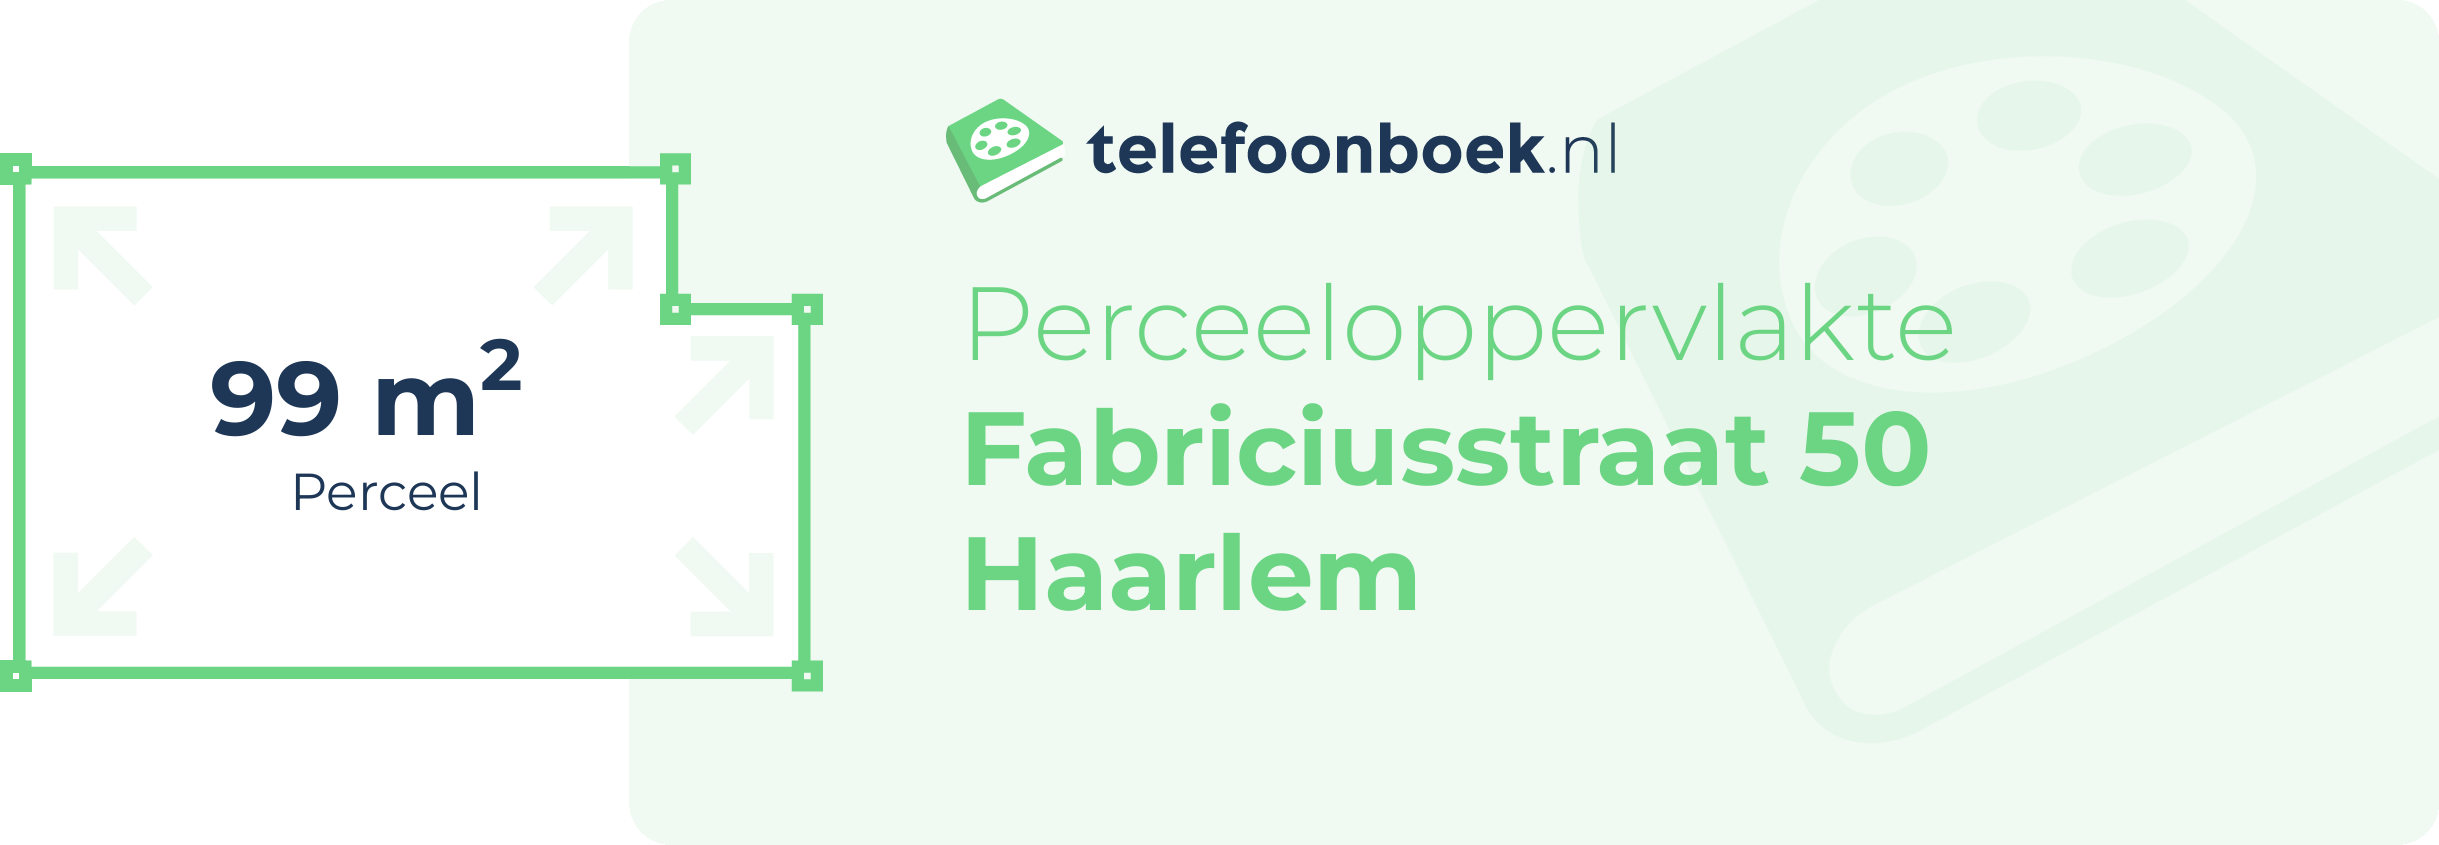 Perceeloppervlakte Fabriciusstraat 50 Haarlem